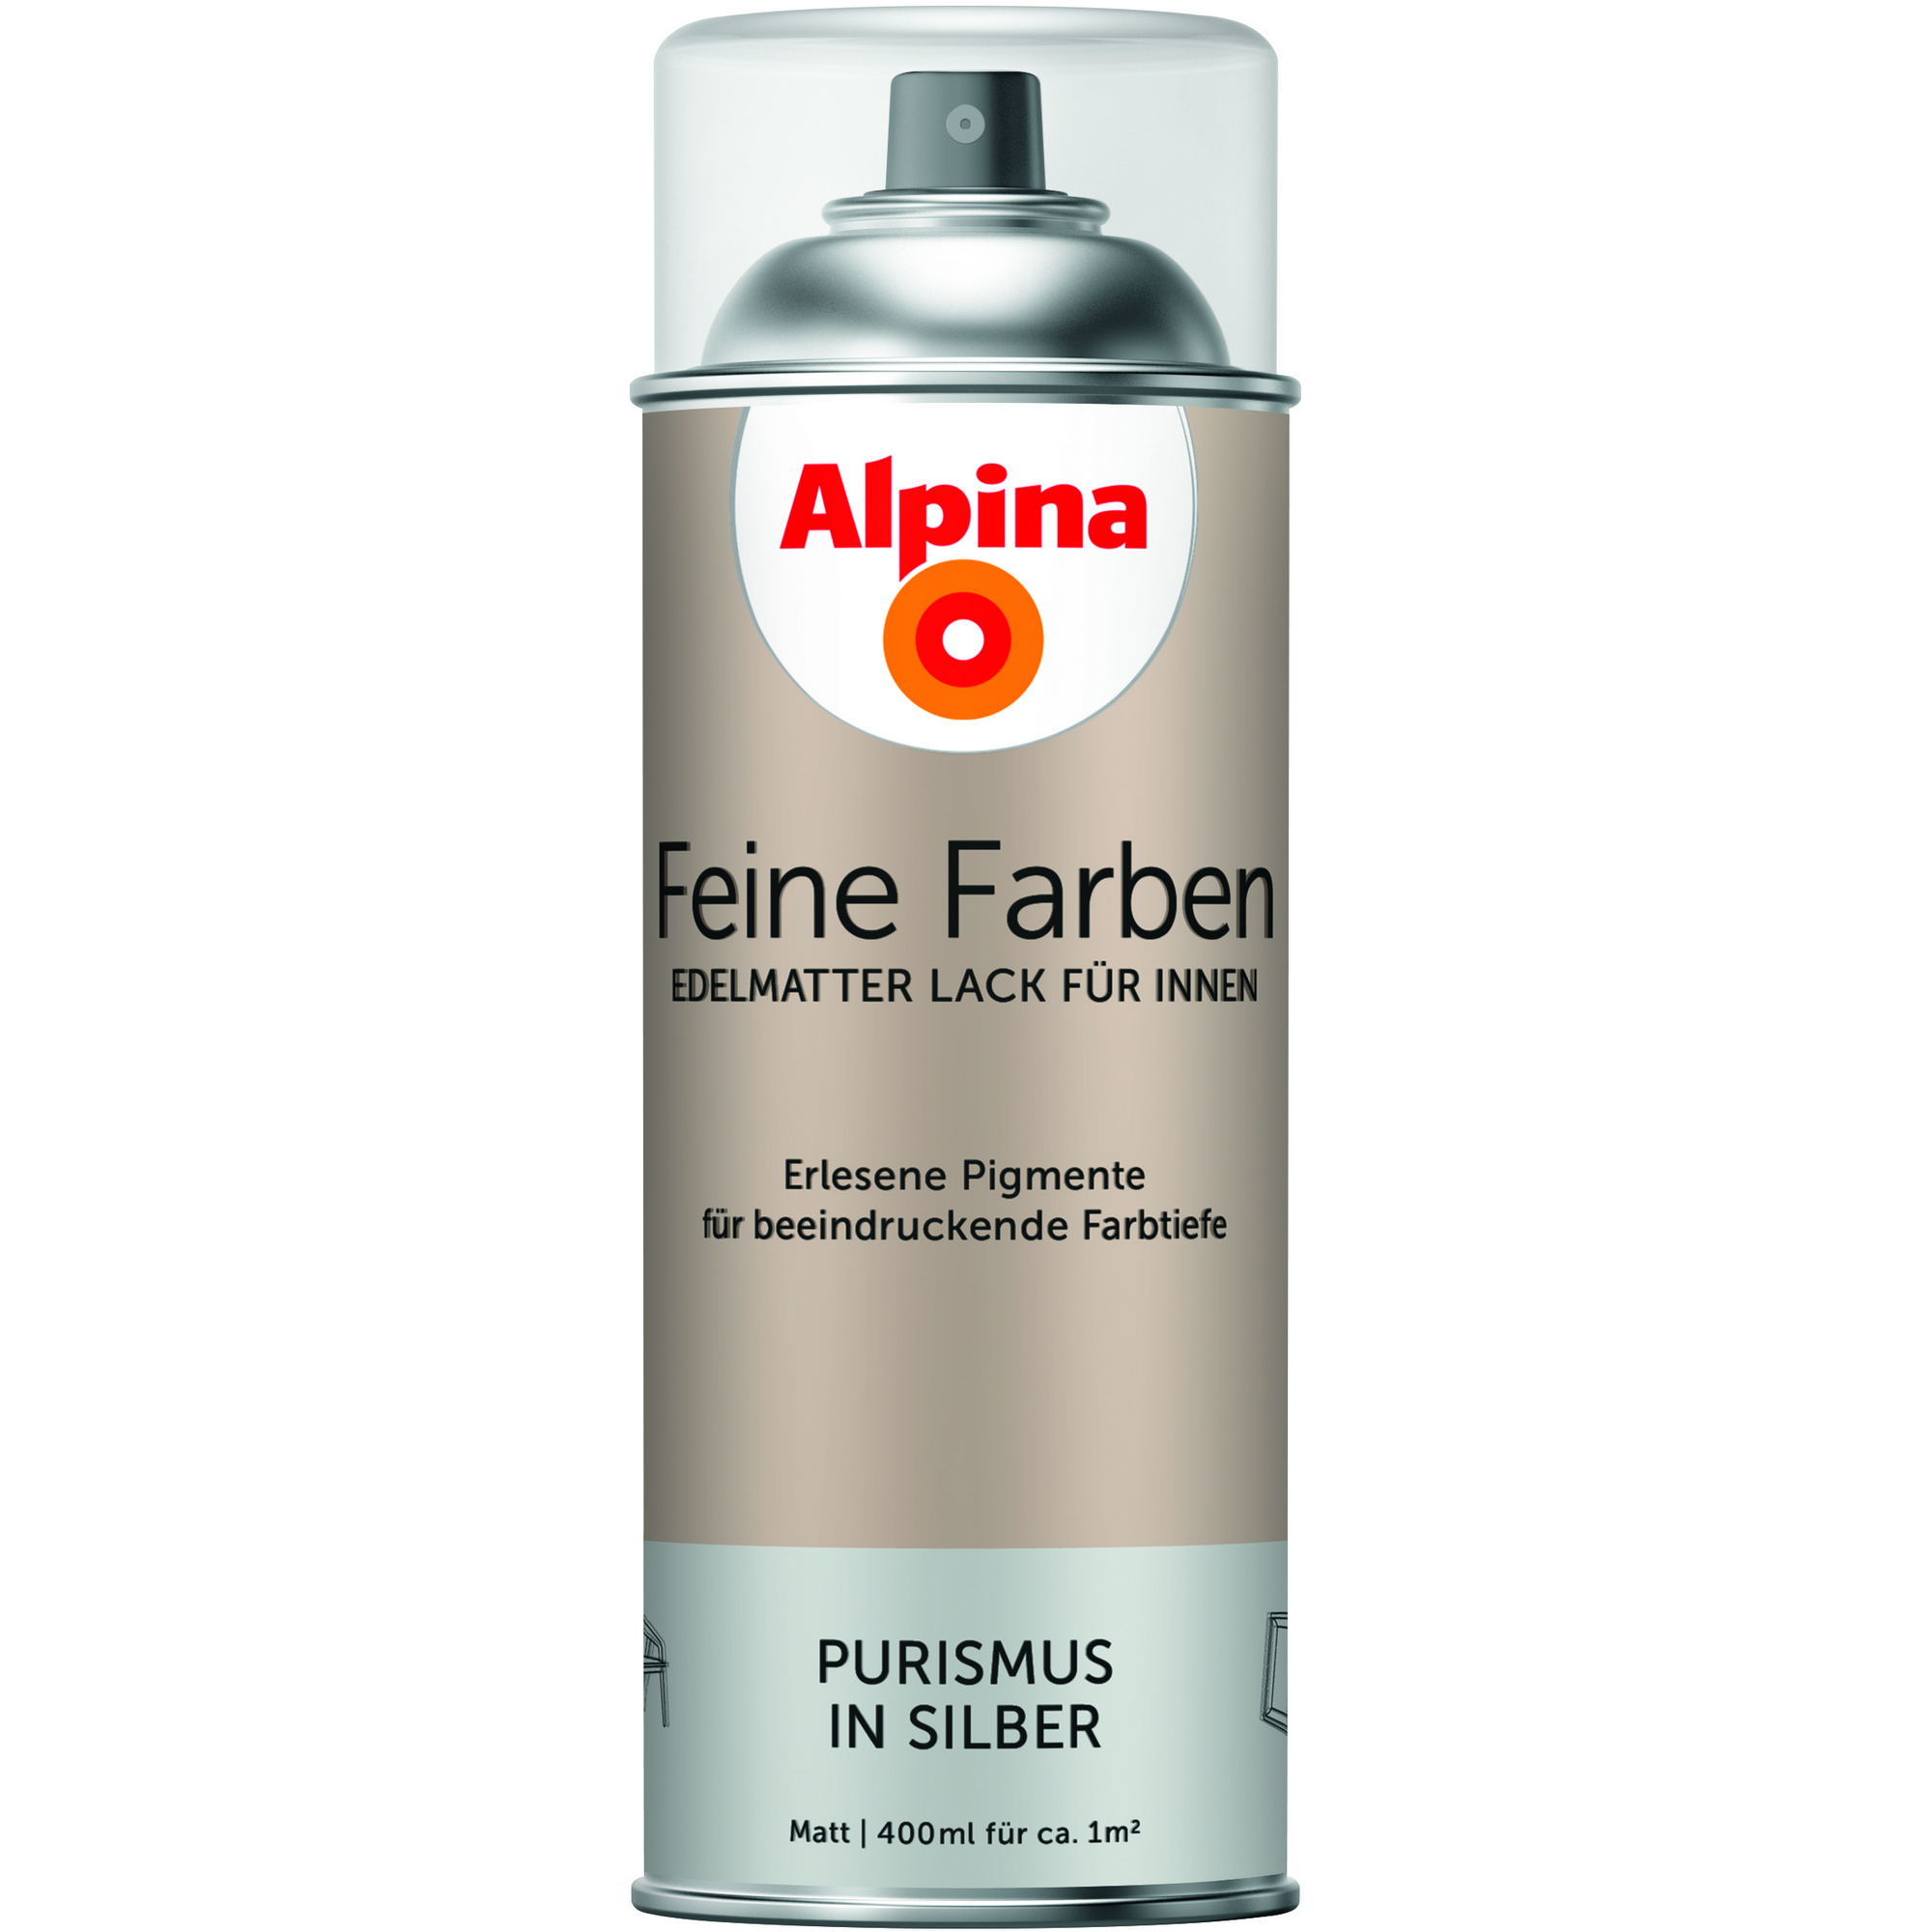 Feine Farben 'Purismus in Silber' silber matt 400 ml + product picture